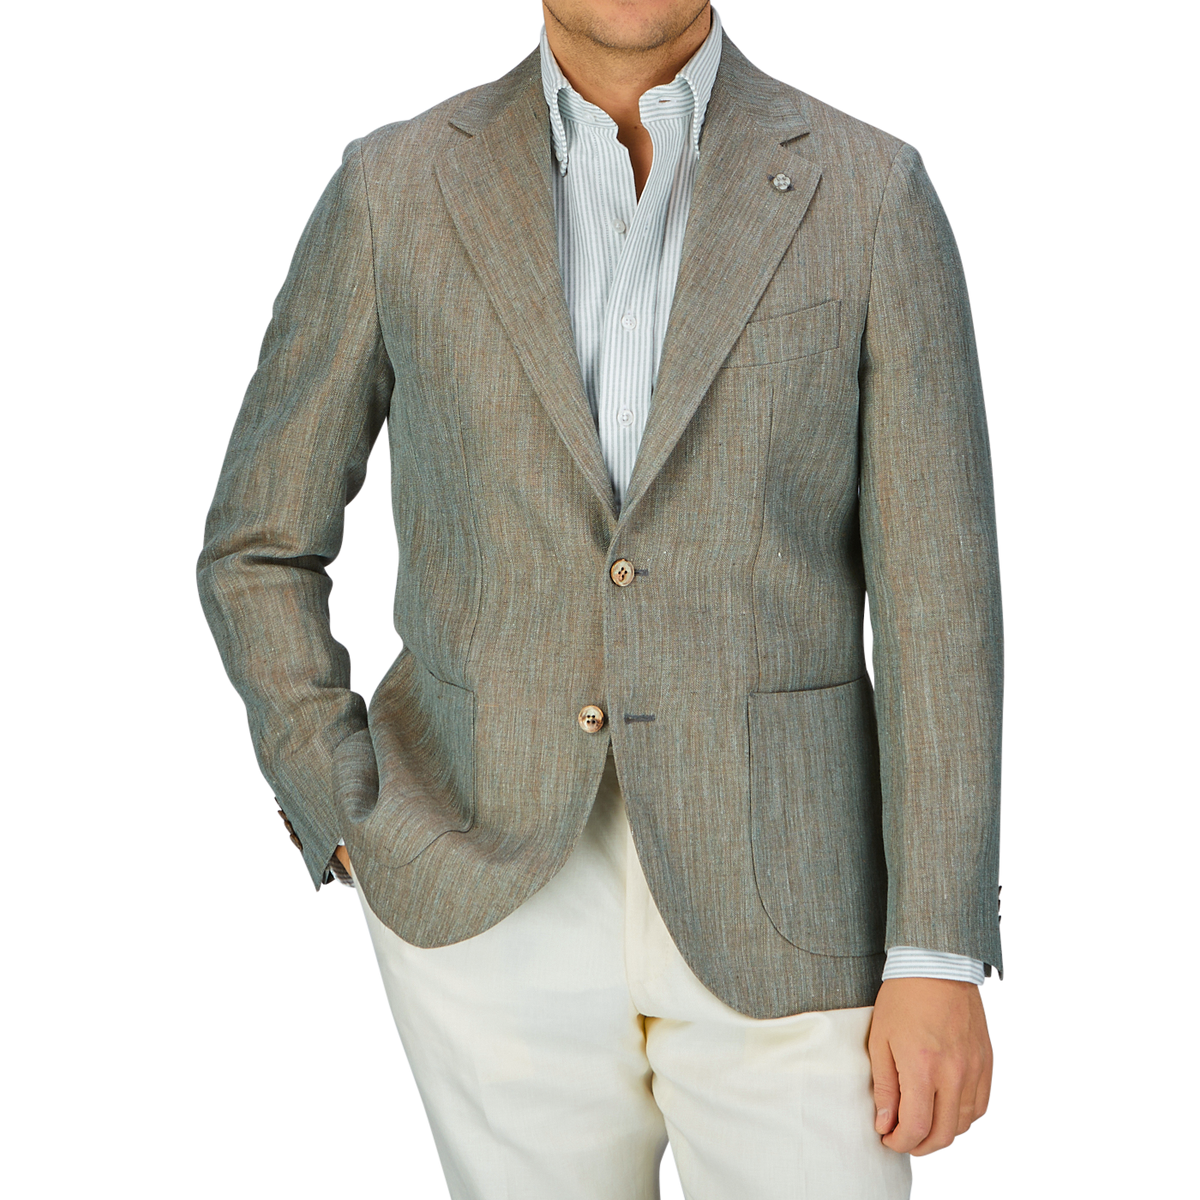 A man wearing a Green Melange Herringbone Linen Blazer from Studio 73, striped shirt, and white pants.